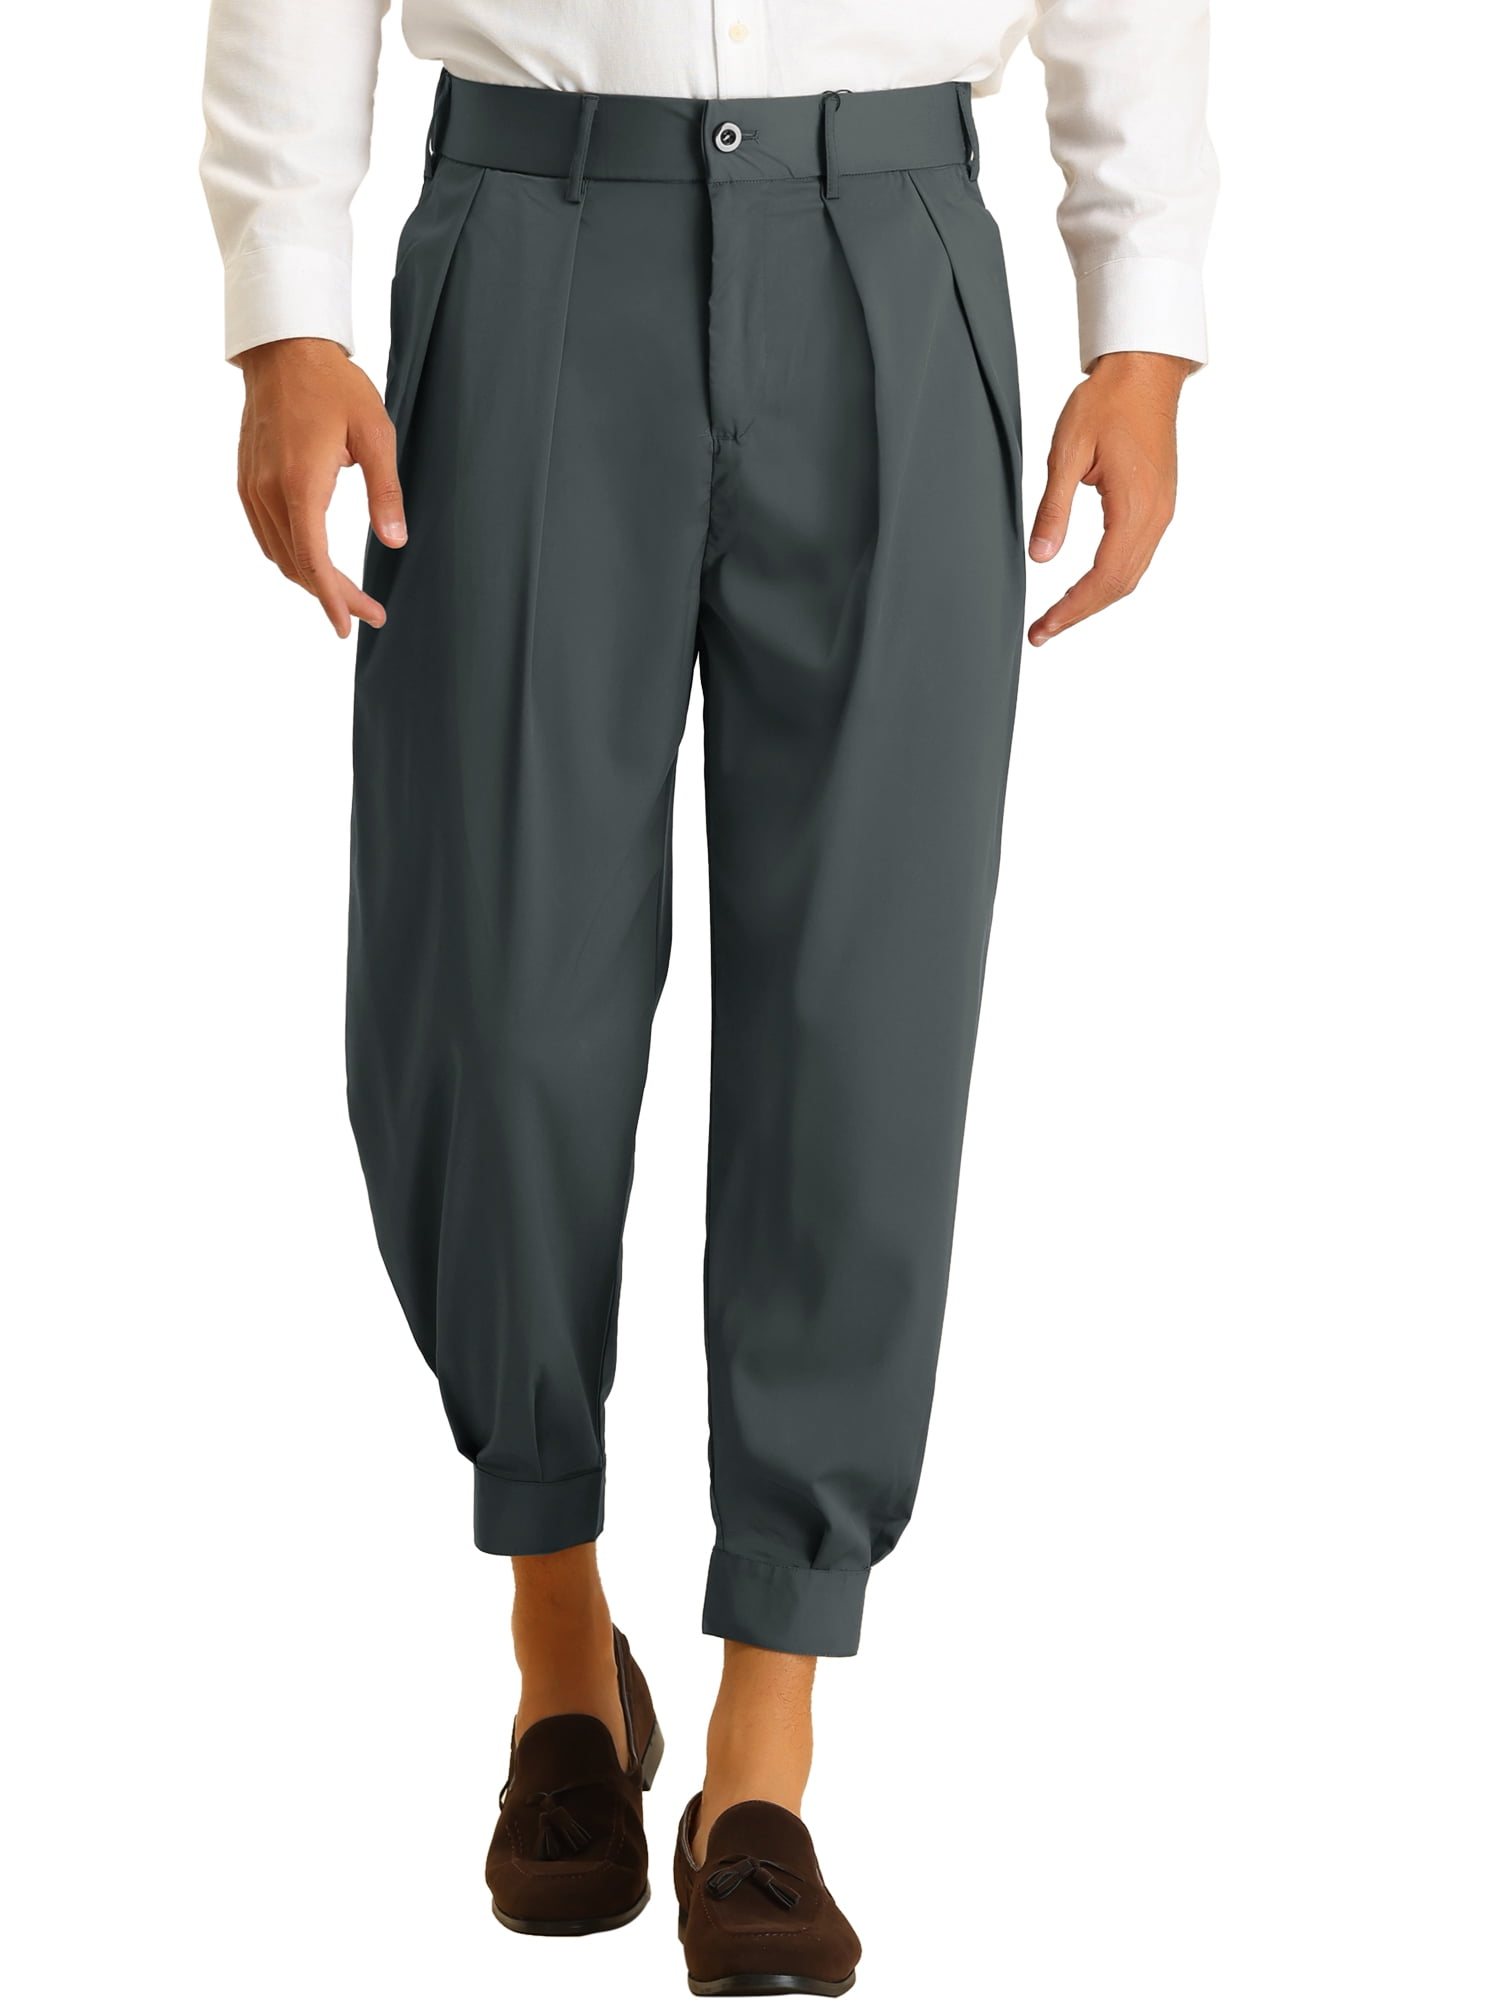 Men's Navy Plain Double Pleat Trousers, Ideal For Weddings, Formal, Prom,  Ascot | eBay